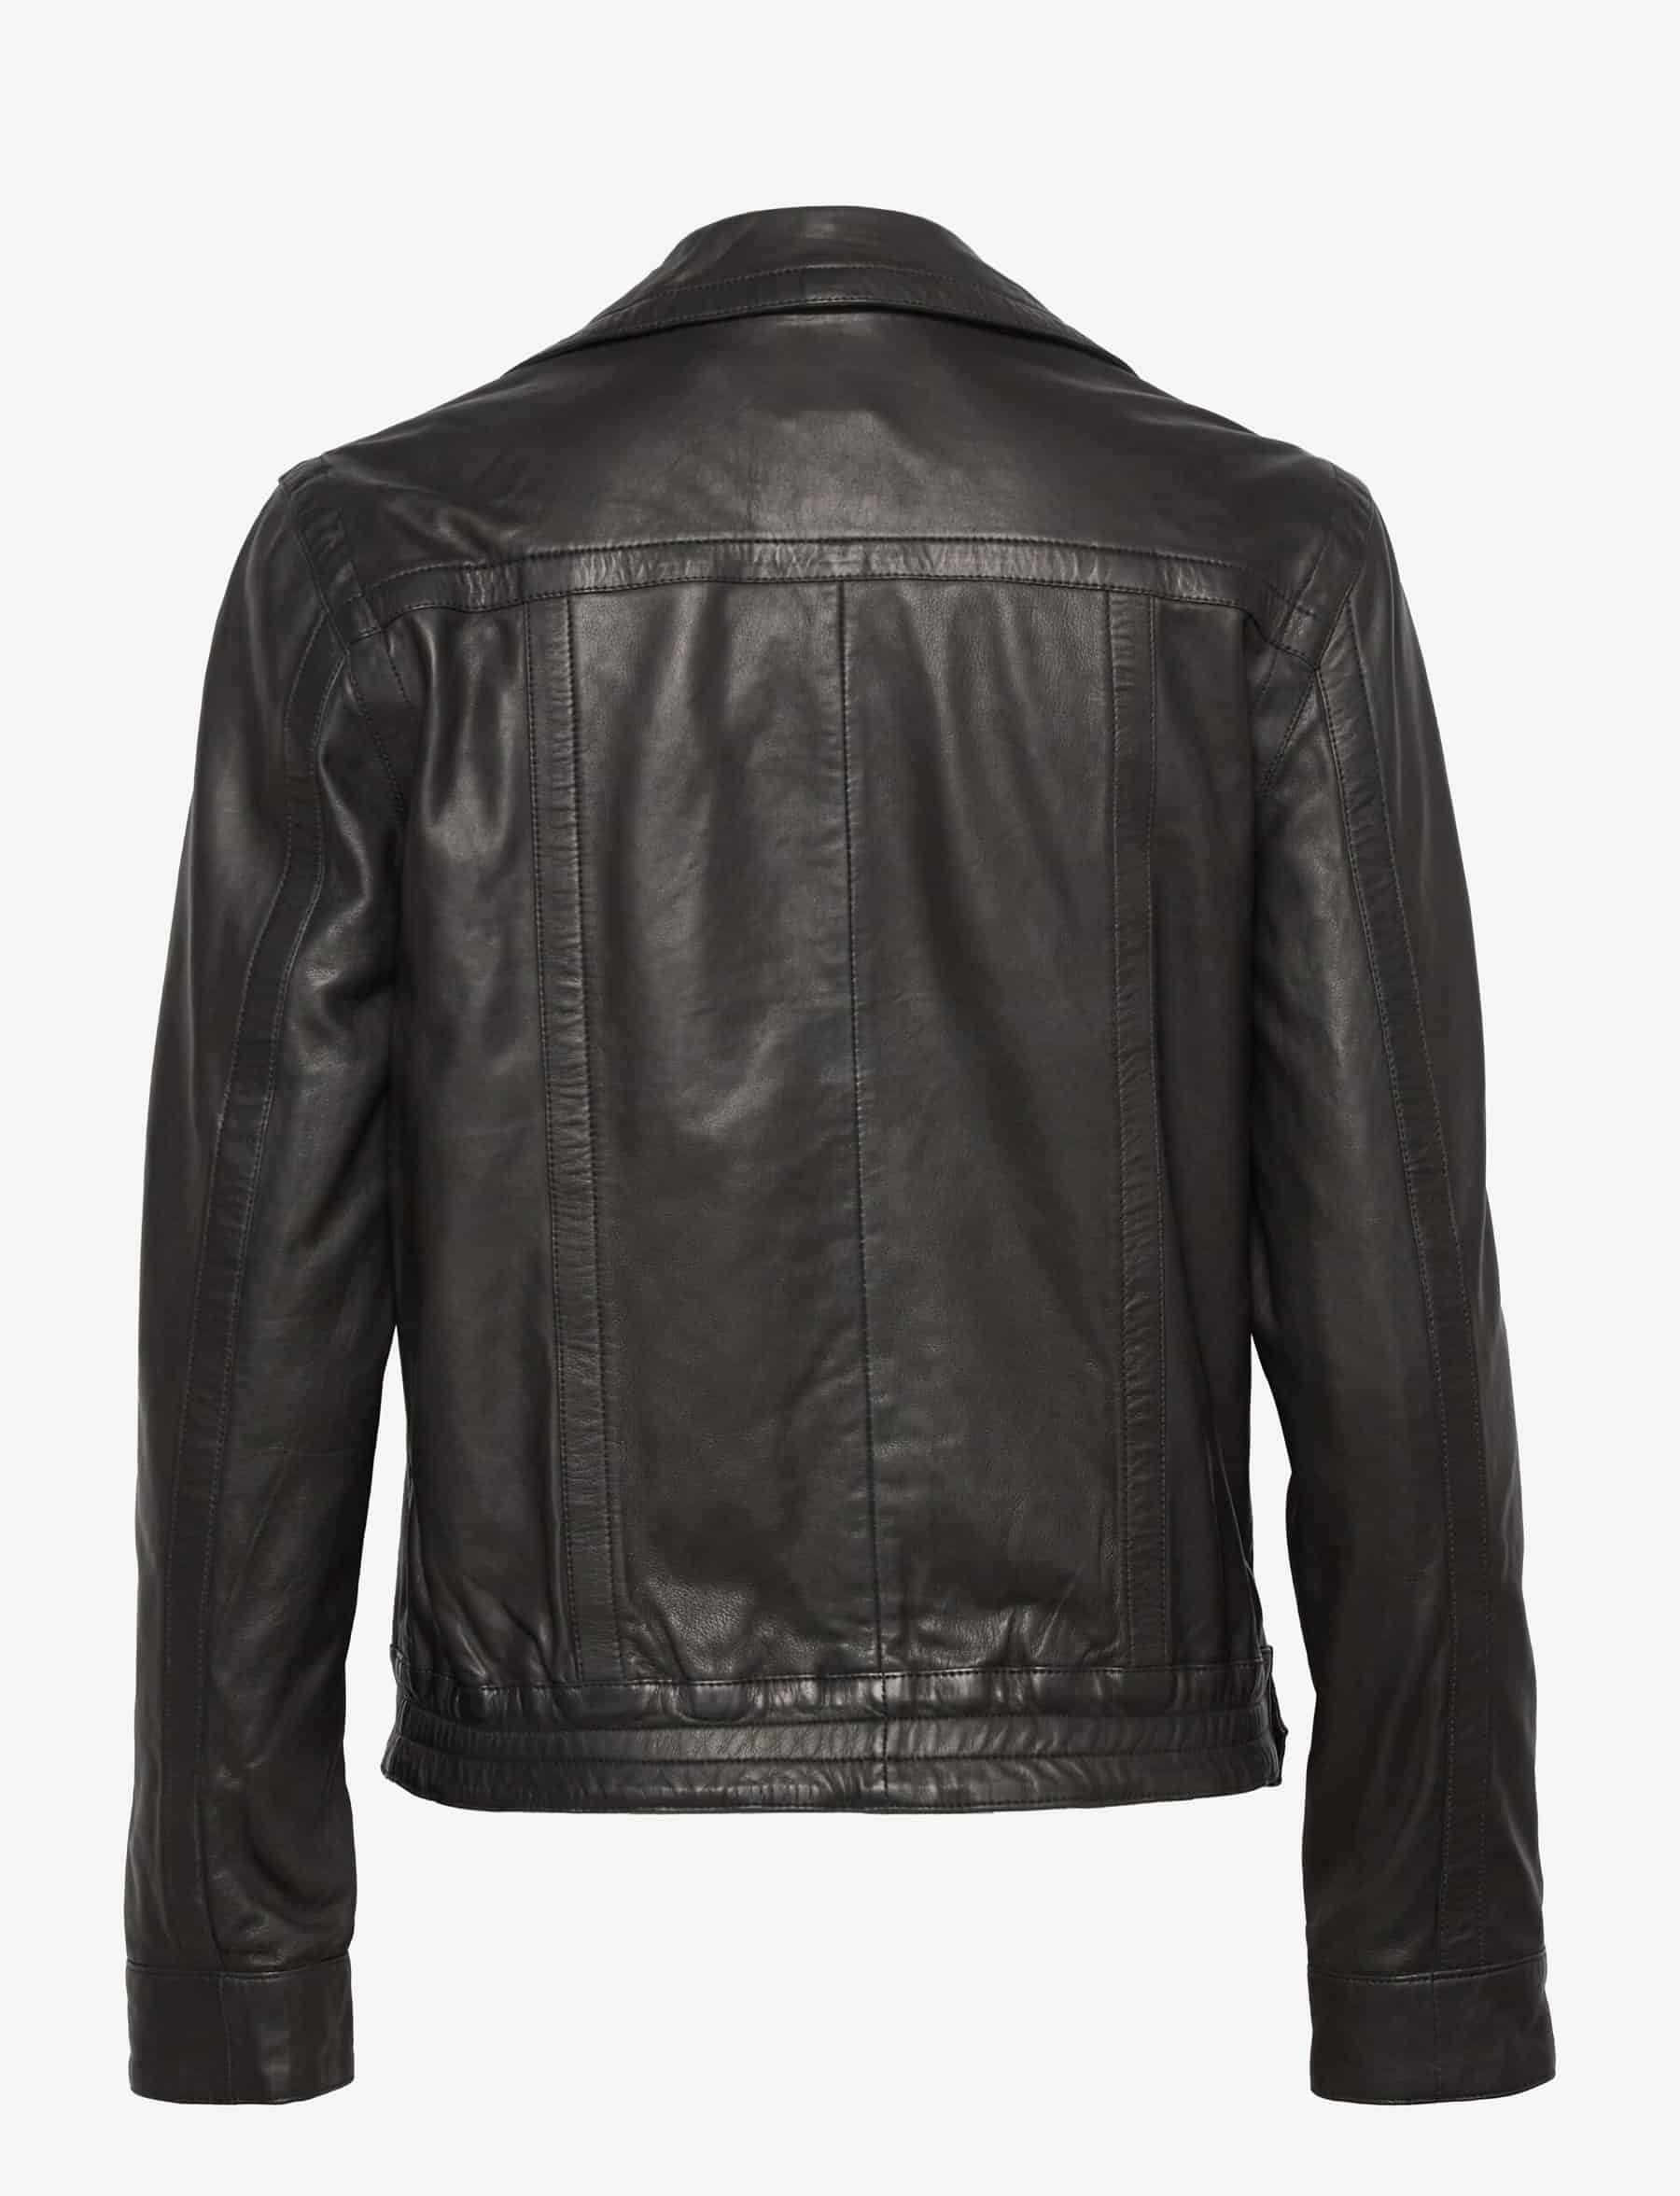 MDK Brave Leather Jacket Black - Cocaranti